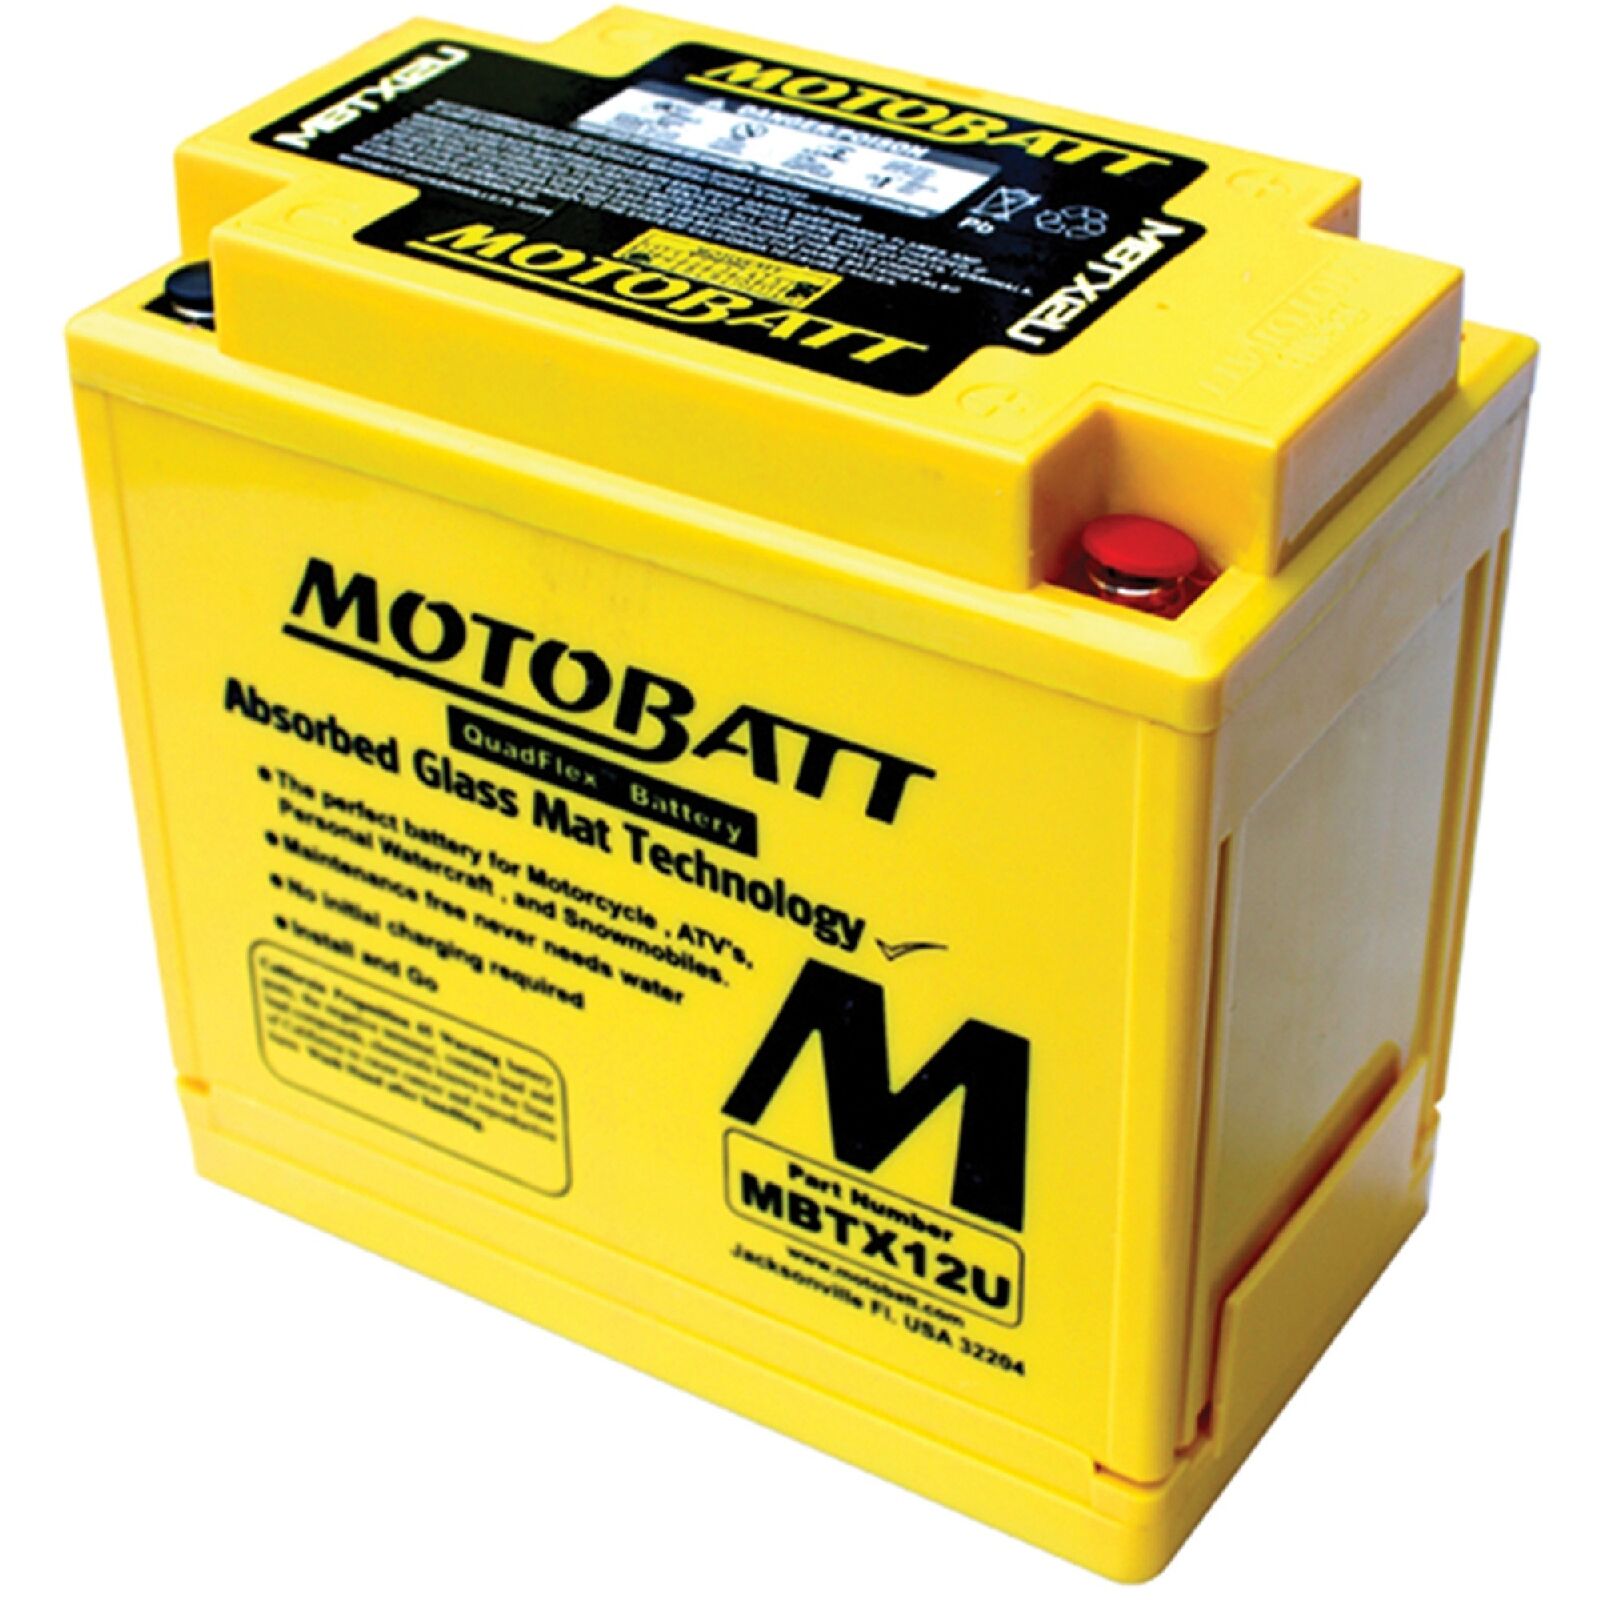 Motobatt Battery for Yamaha FZR1000 1000cc 91-95 MBTX12U